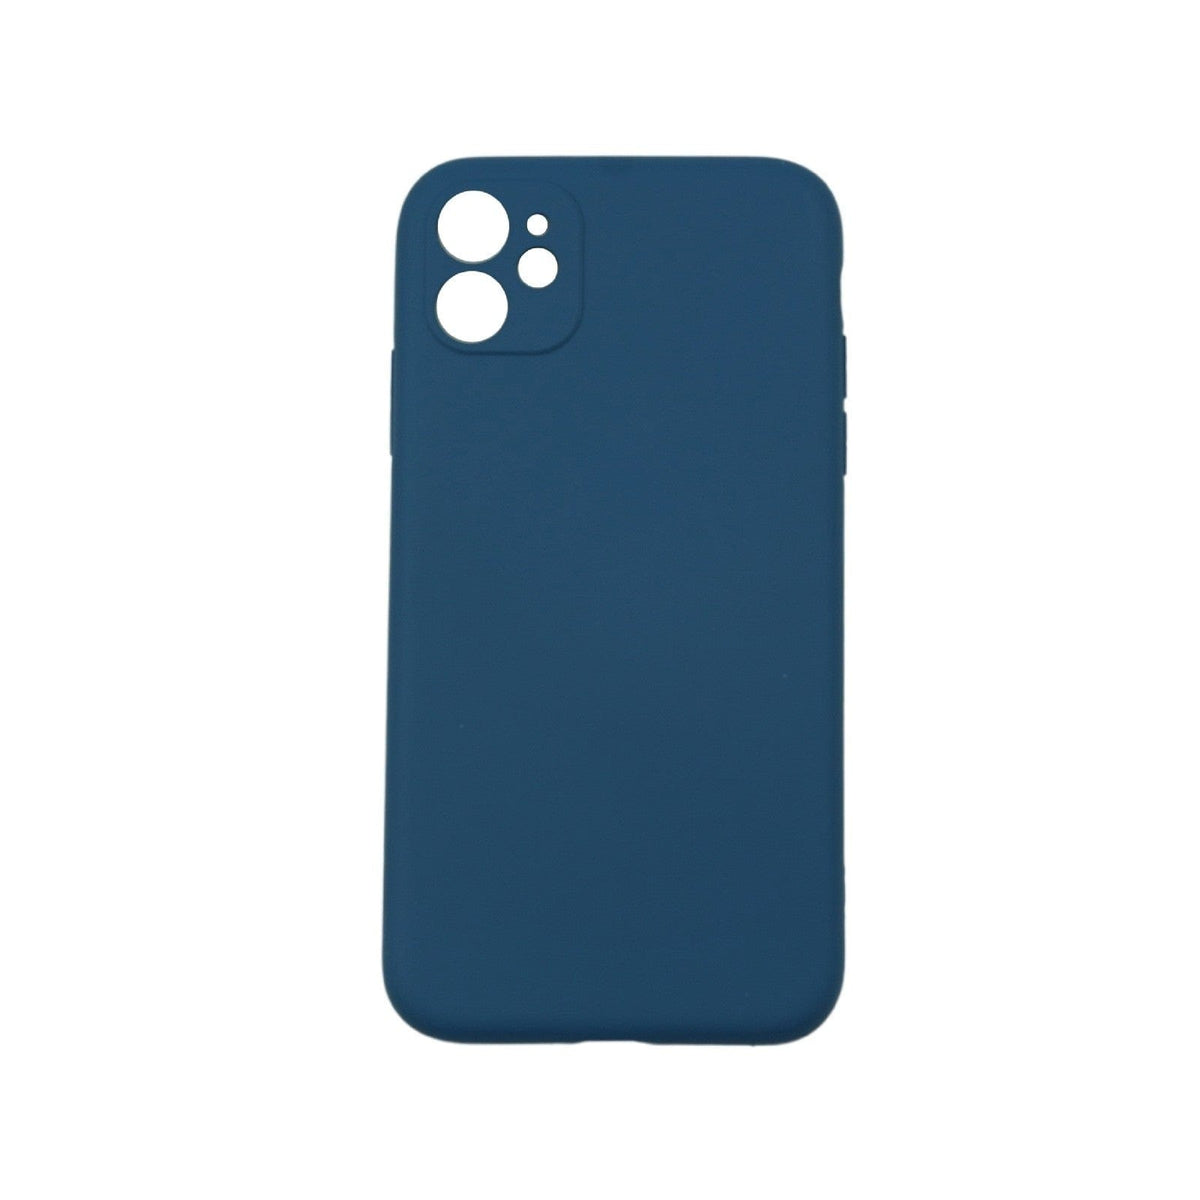 Husa protectie compatibila cu Huawei P30 Lite Liquid Silicone Case Albastru inchis